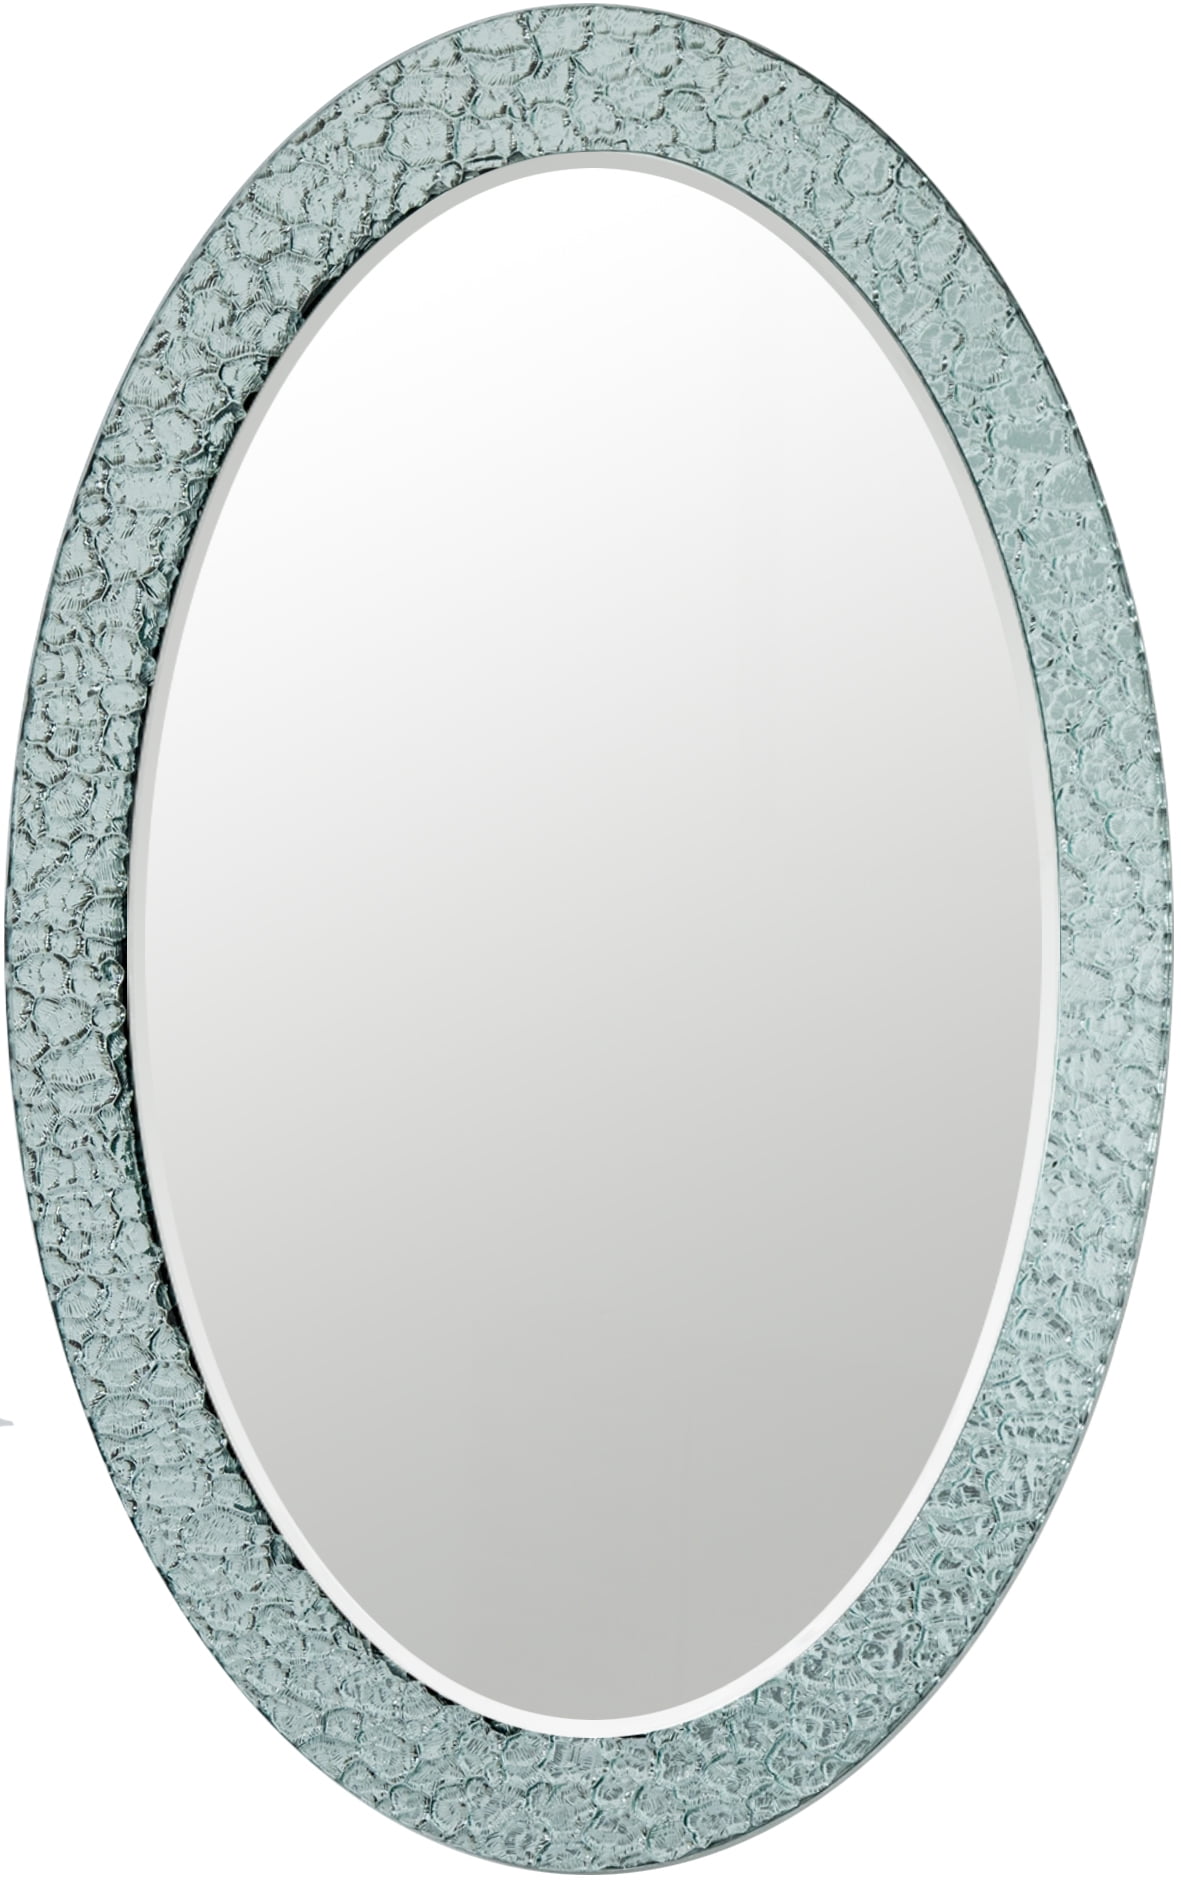 Ssm5039s1 31.5 X 23.6 In. Jewel Frameless Oval Wall Mirror